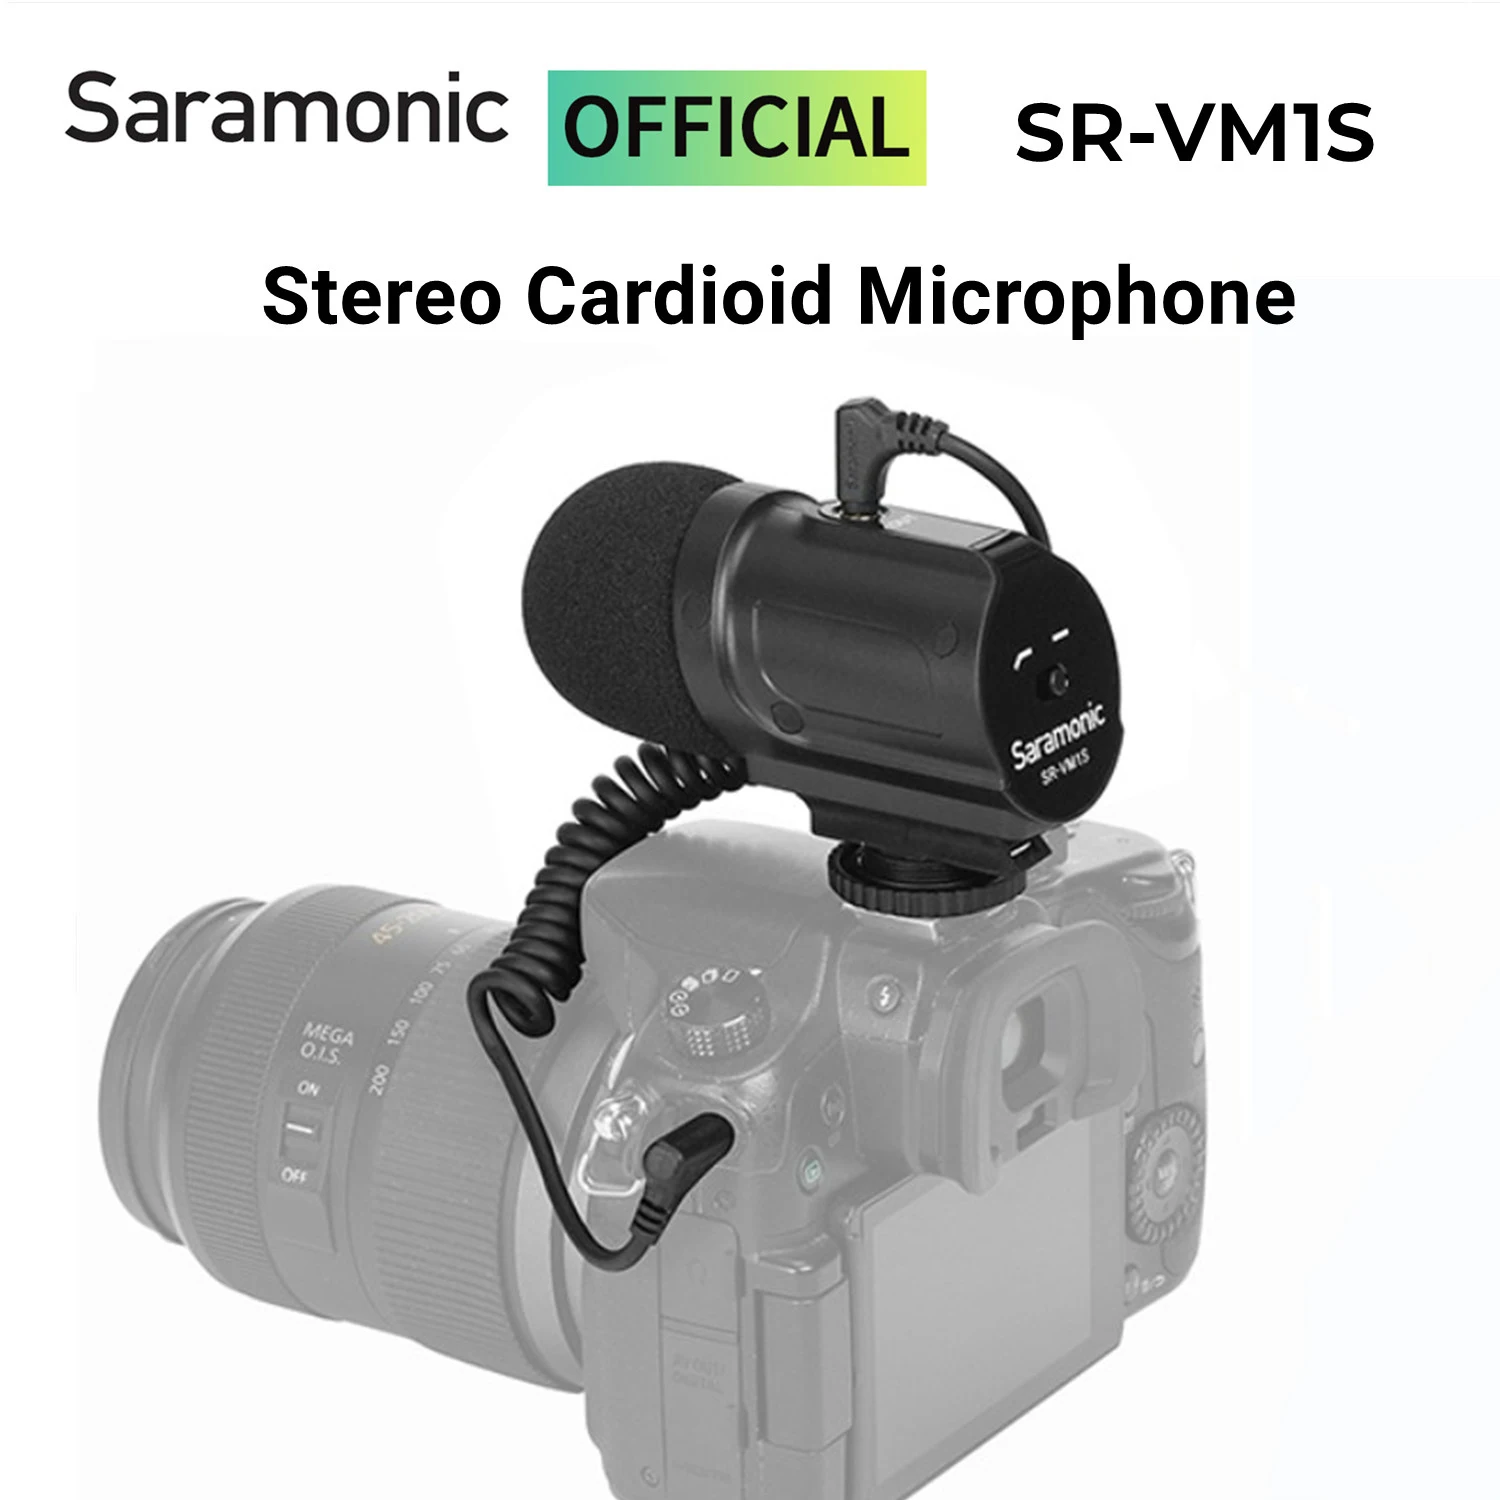 Saramonic SR-VM1S Professional Stereo Cardioid On-camera Shotgun Condenser Microphone for DSLR Camera Youtube Live Streaming